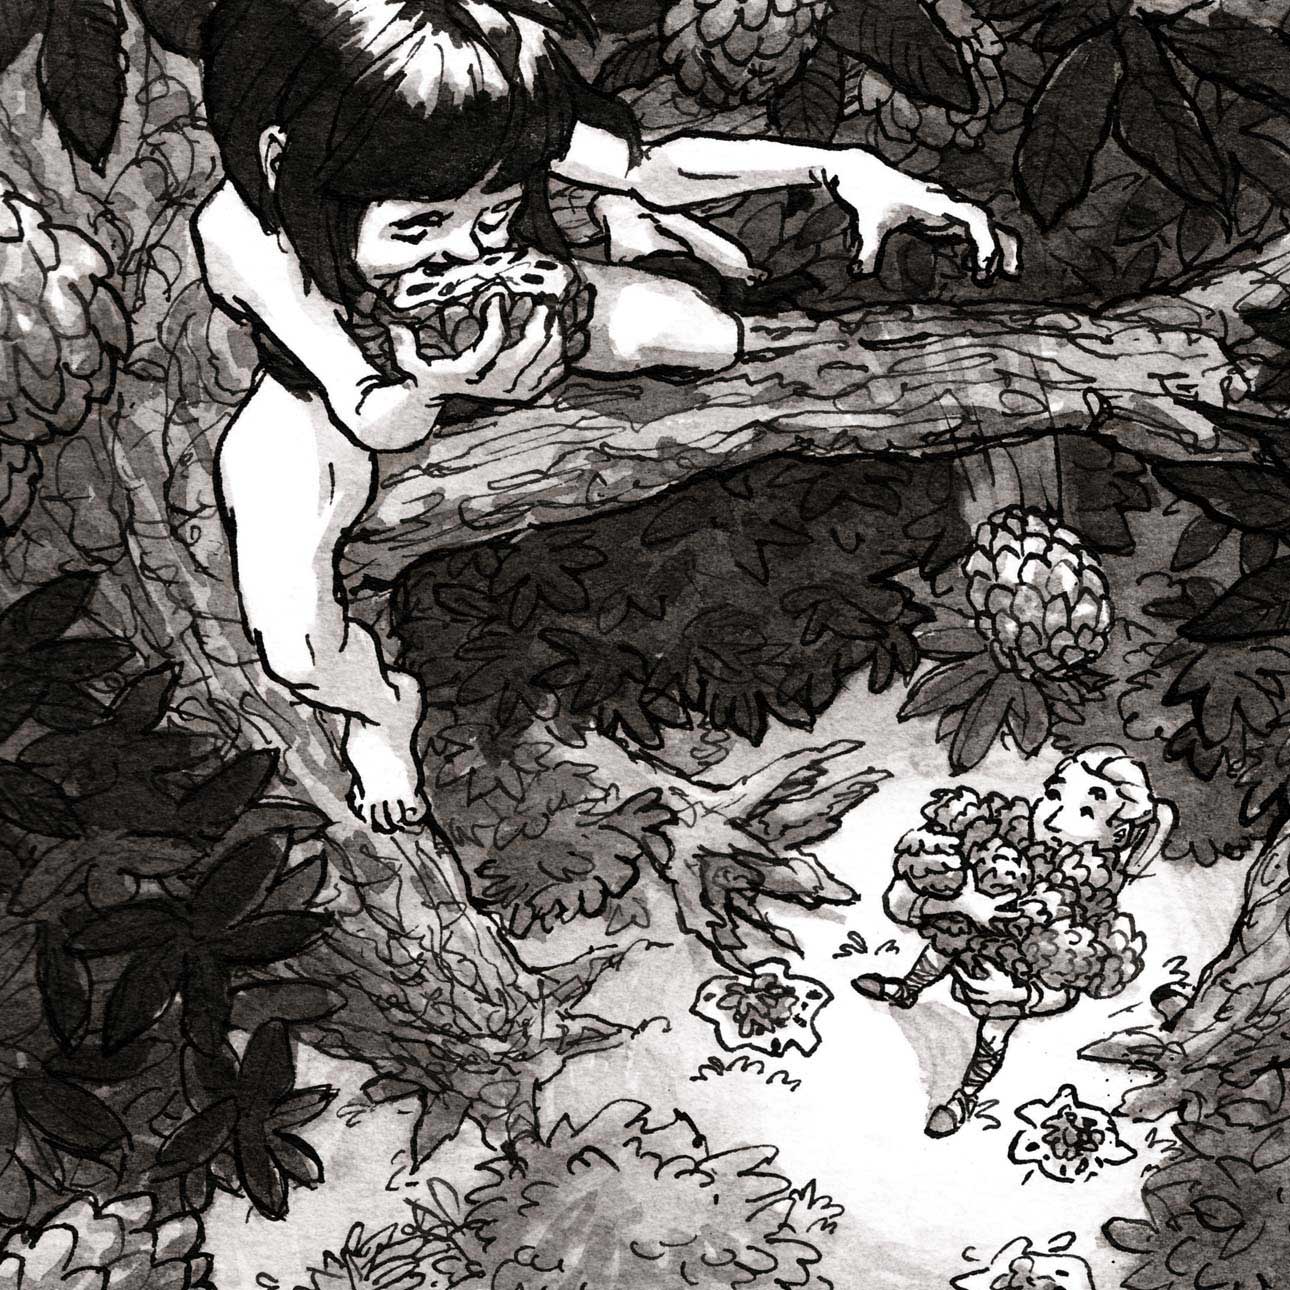 ink drawing illustration indigenous girl on tree throwing fruit